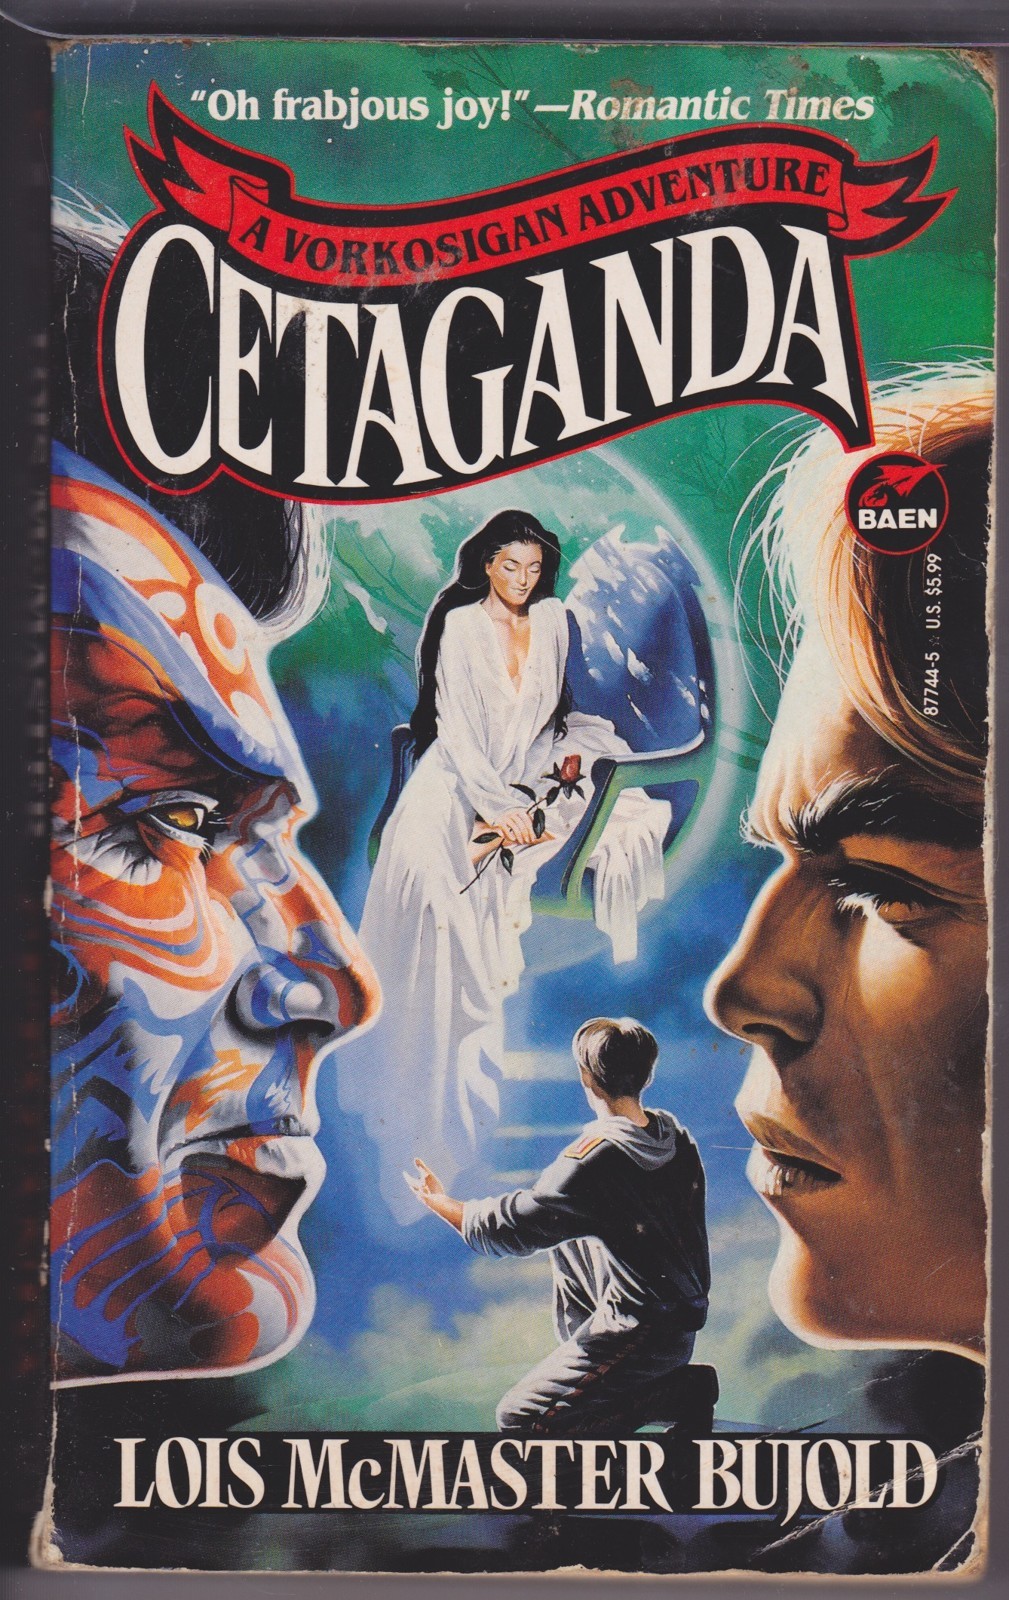 Cetaganda (Vorkosigan Saga)